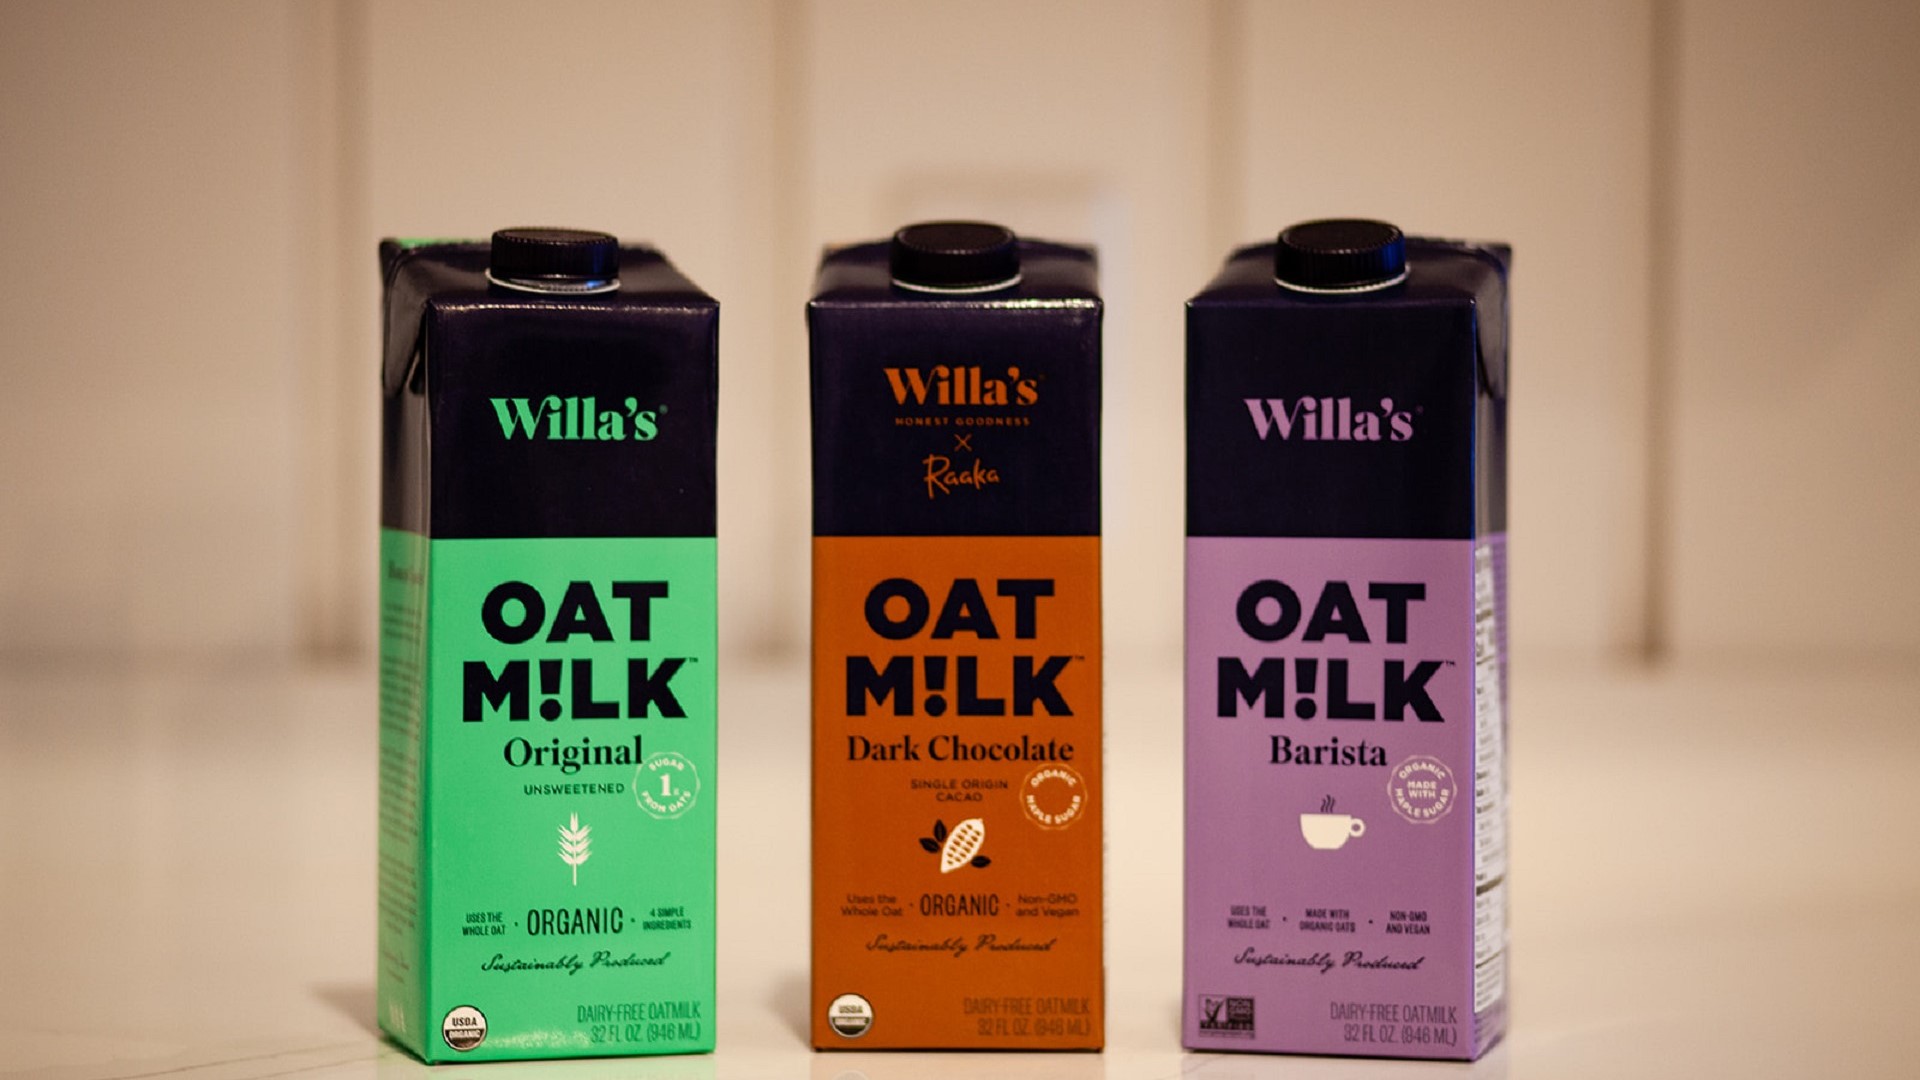 Willa's Oat Milk cartons